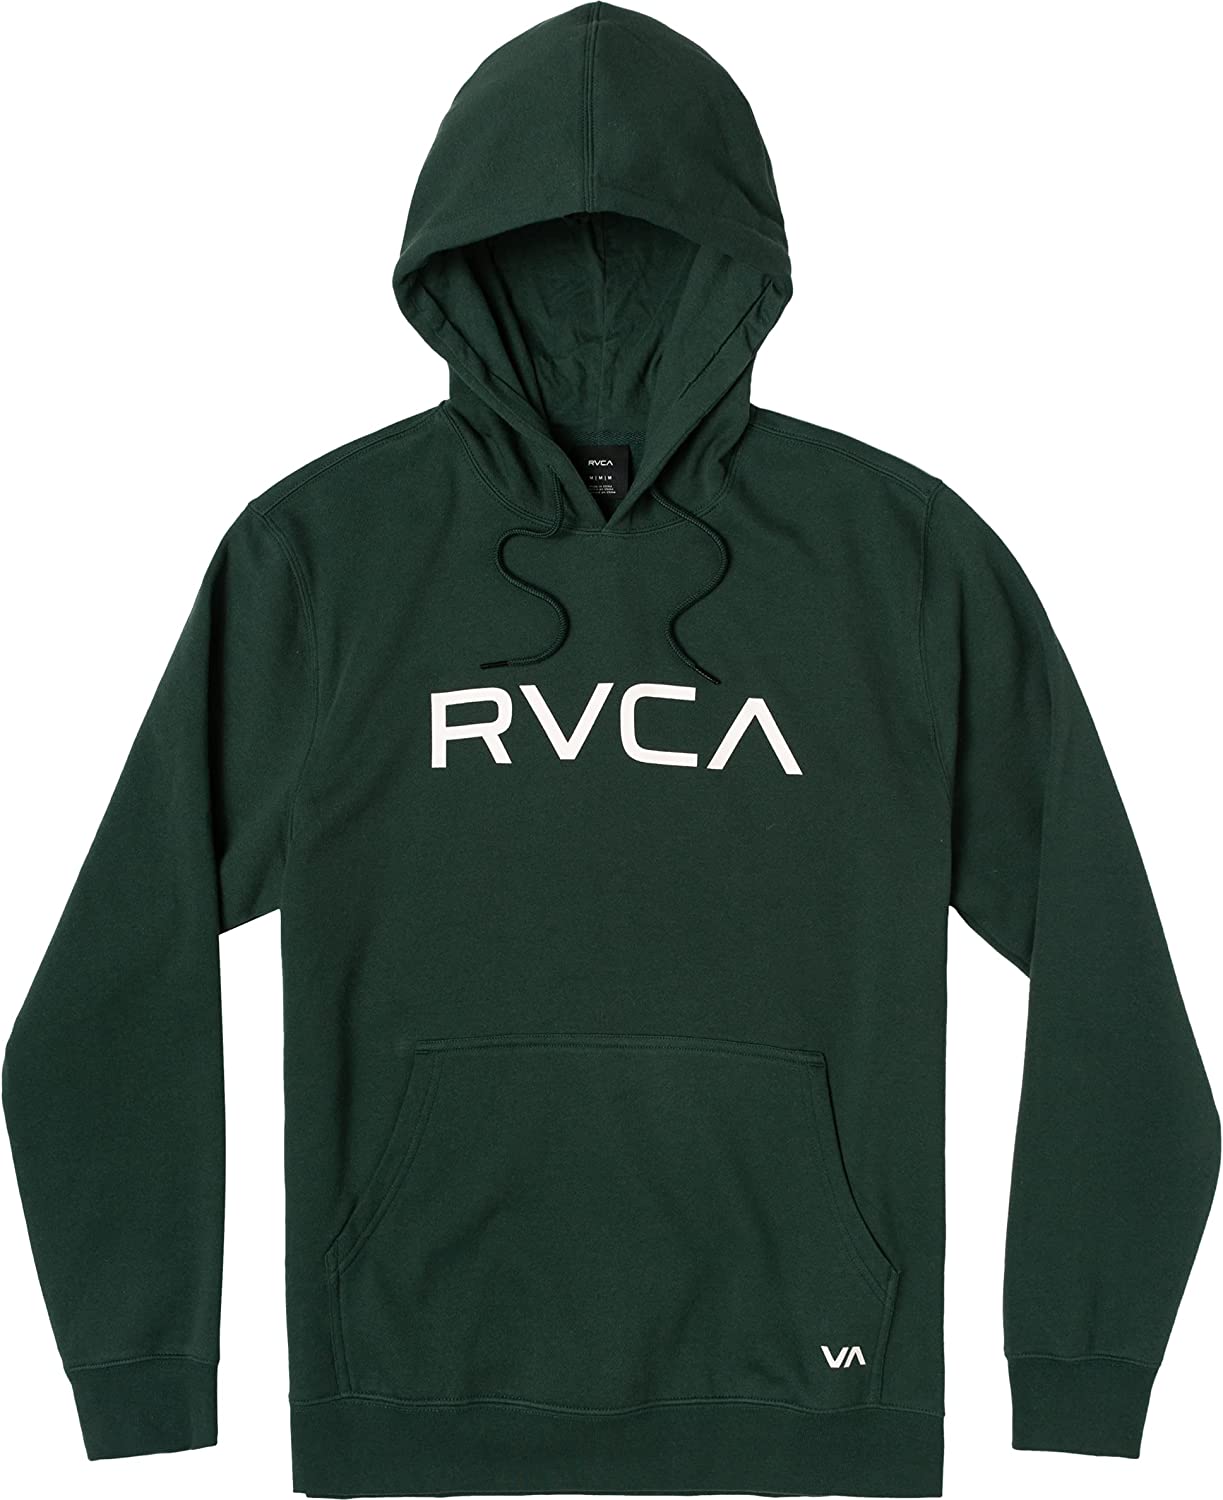 RVCA Men's Big Hooded Sweatshirt